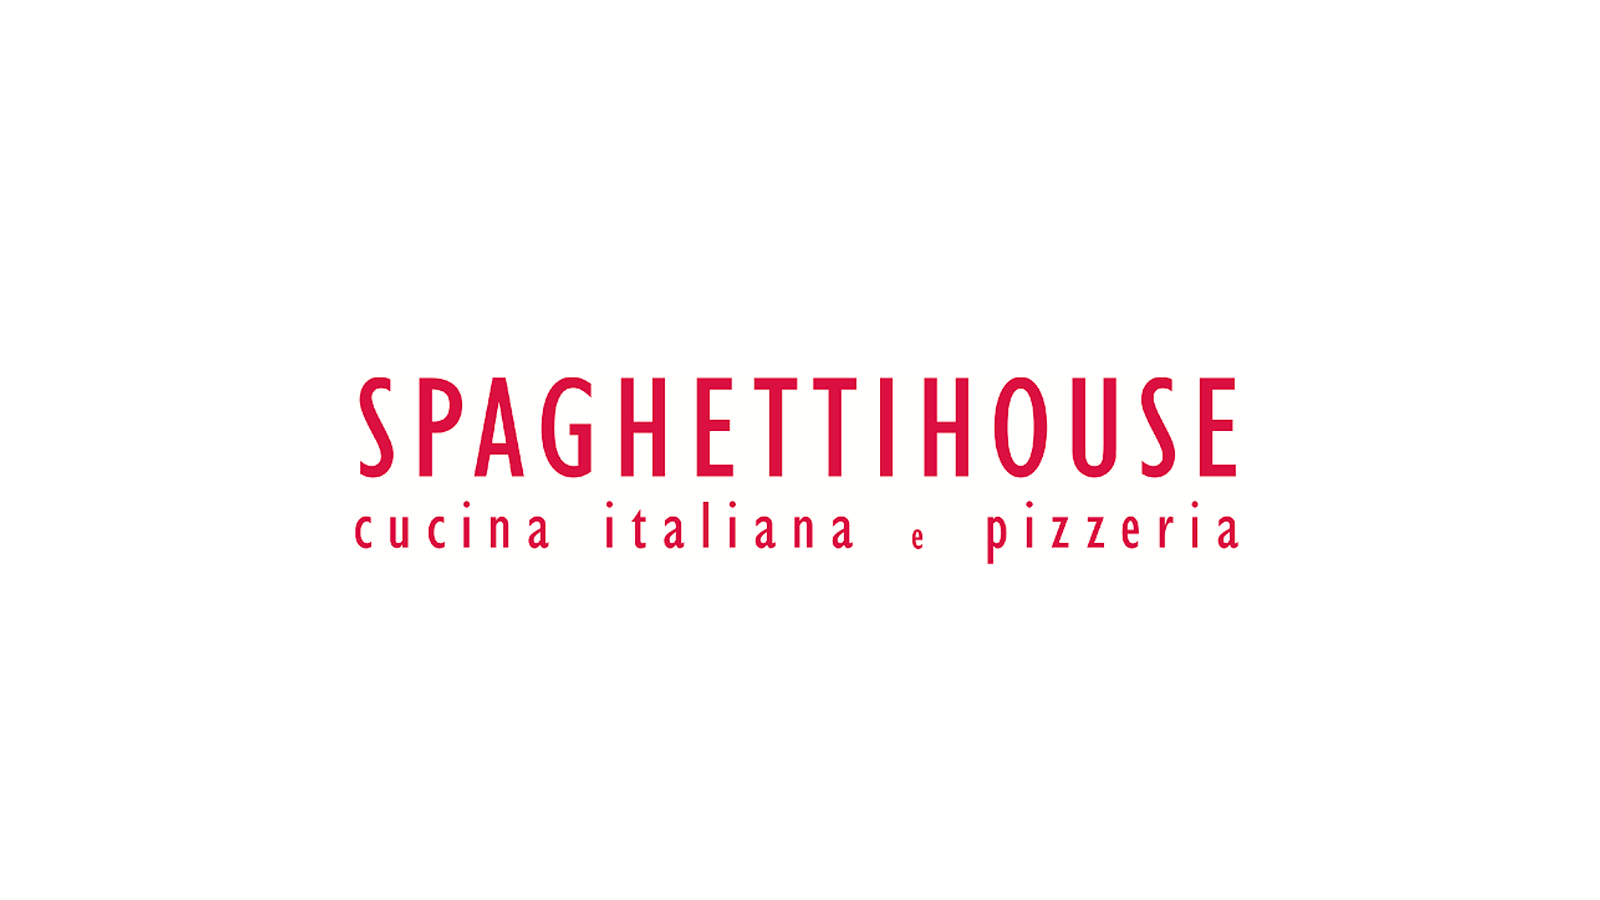 Spaghetti House serves up digital redemption